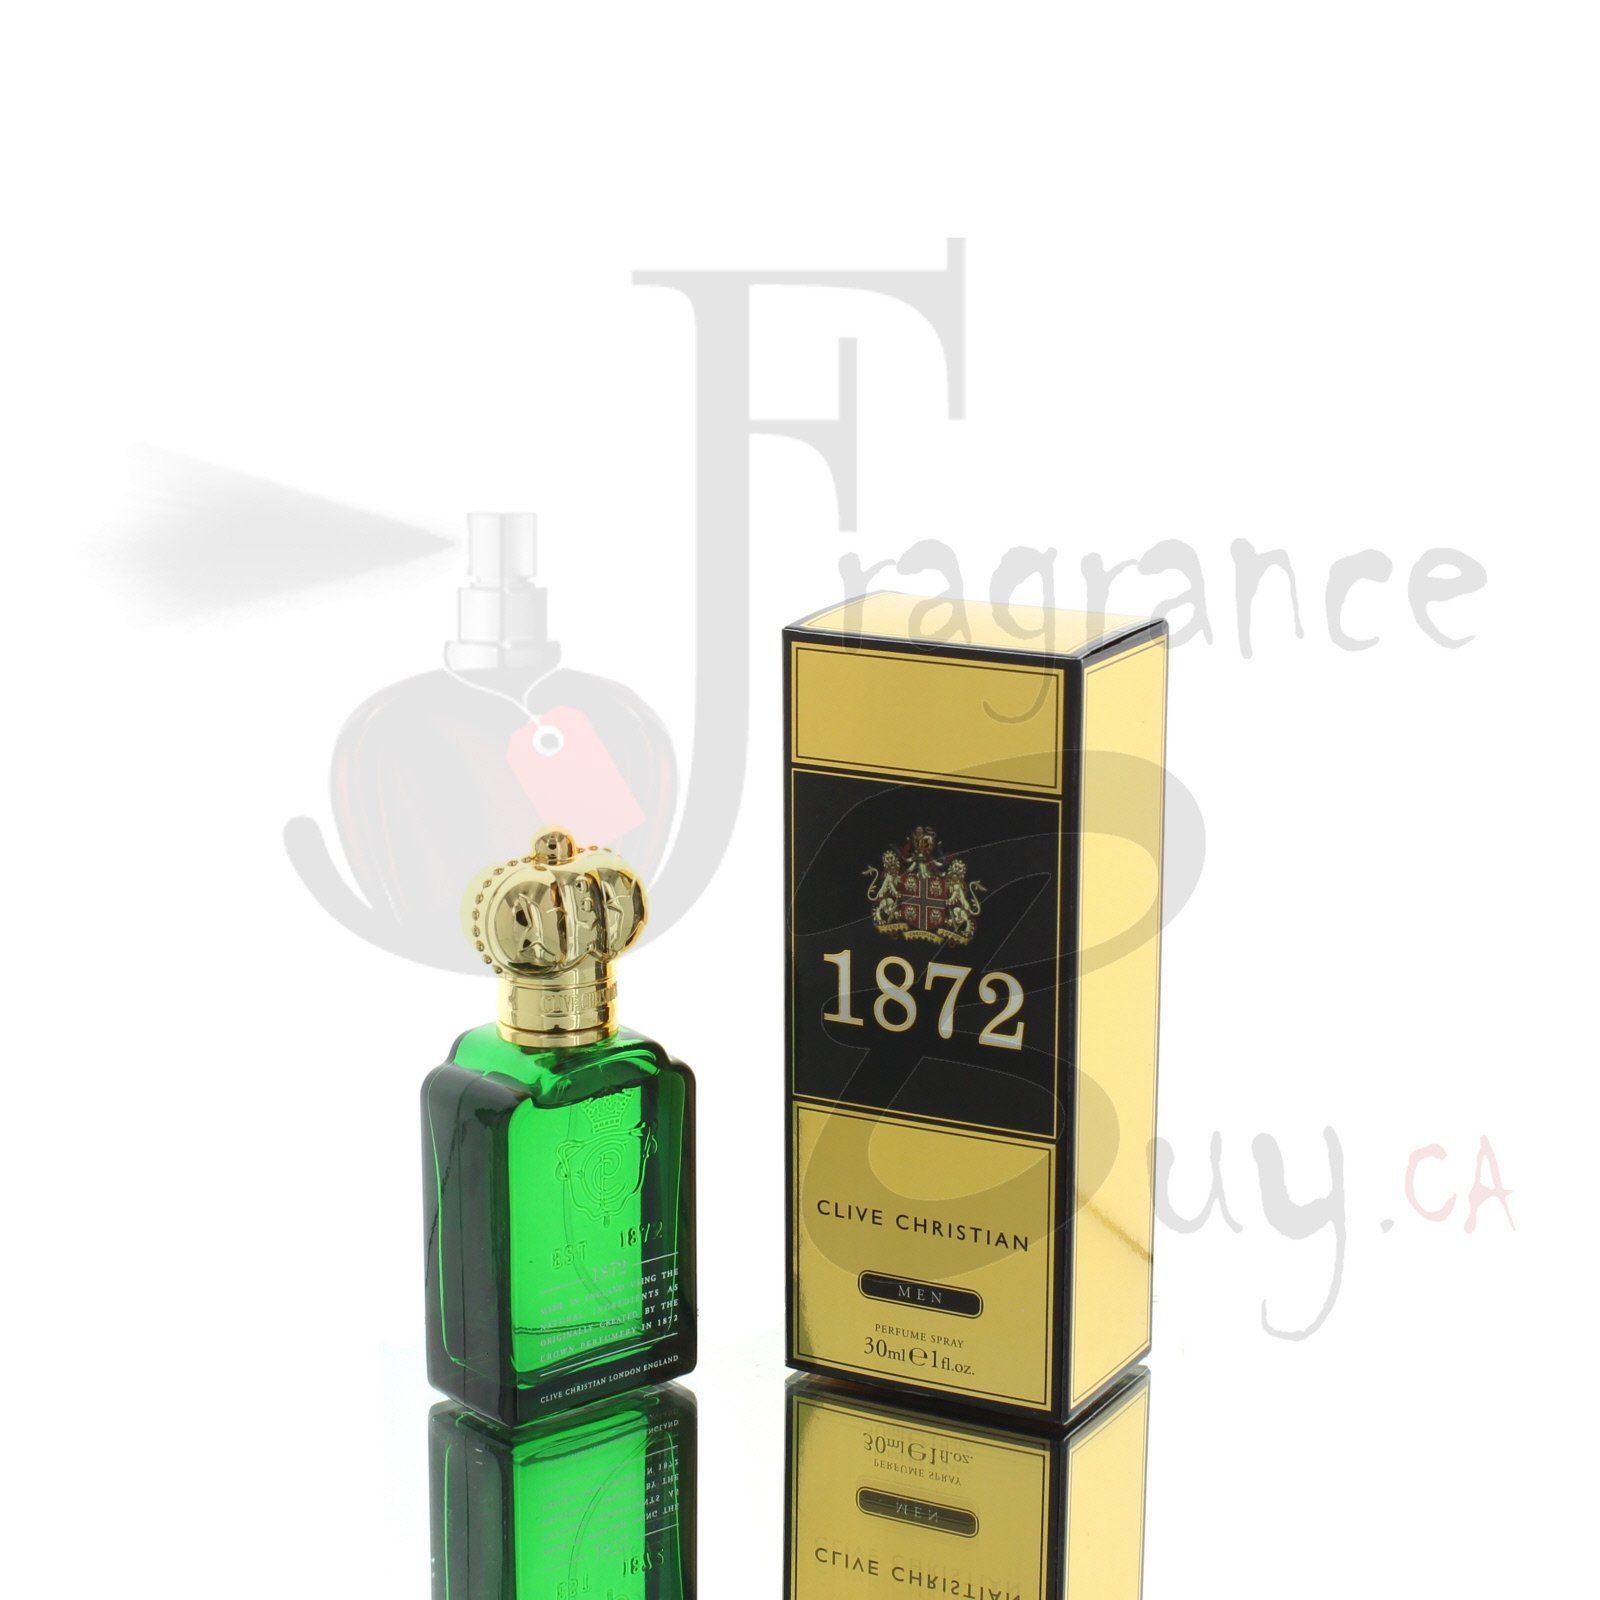 Clive Christian 1872 1.6oz Men's Perfume | eBay